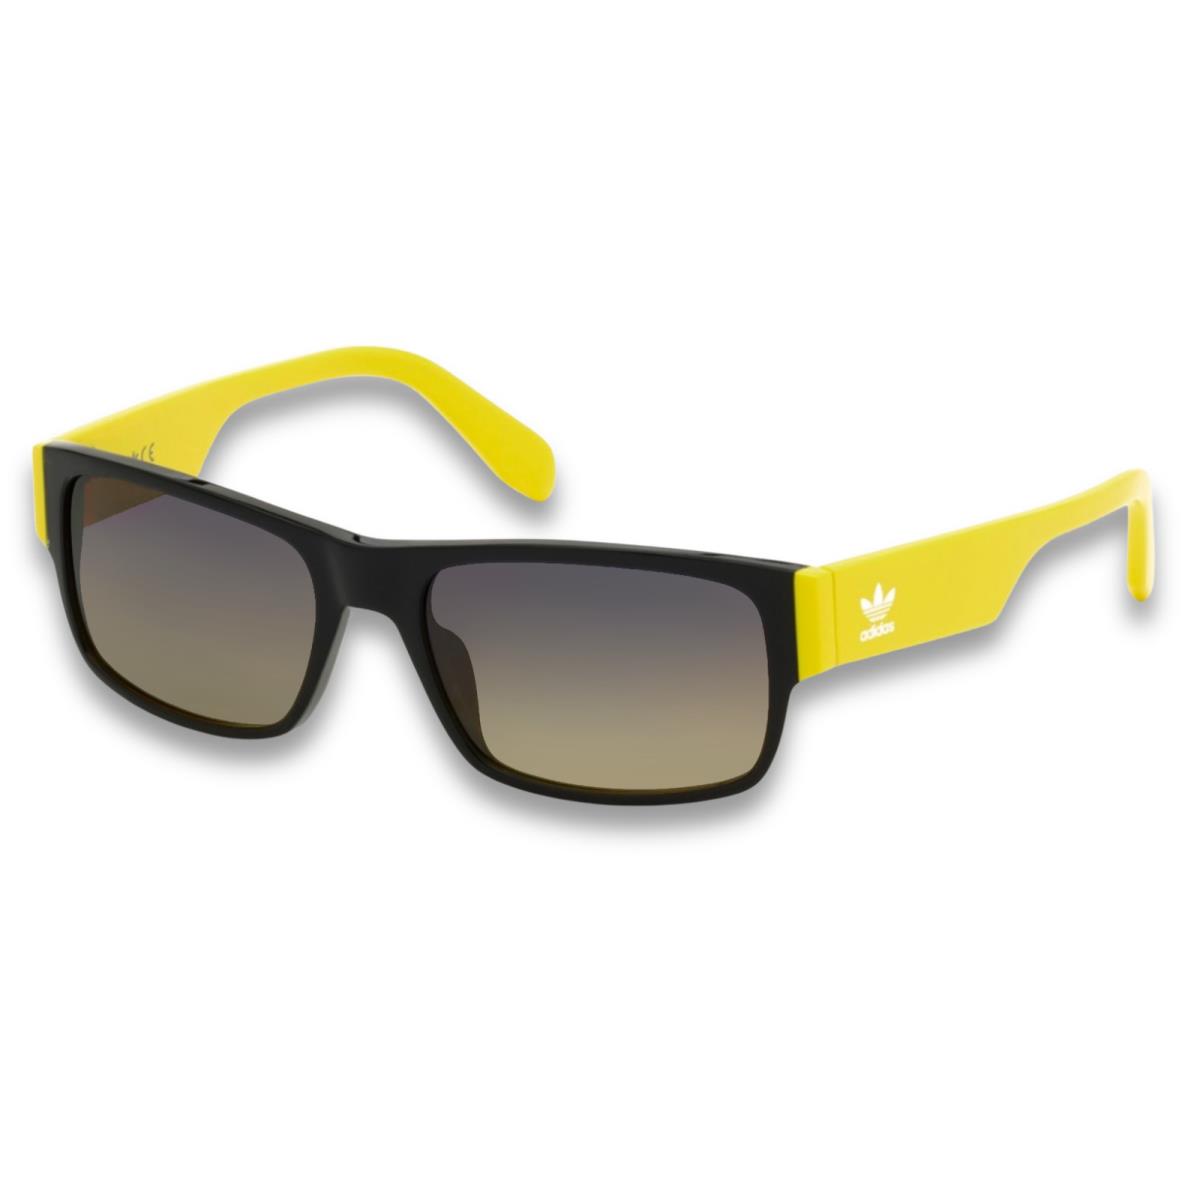 Adidas Sport 0007 Sunglasses - Blk / Yellow - Yellow Smoke Grad. - 43276-X3